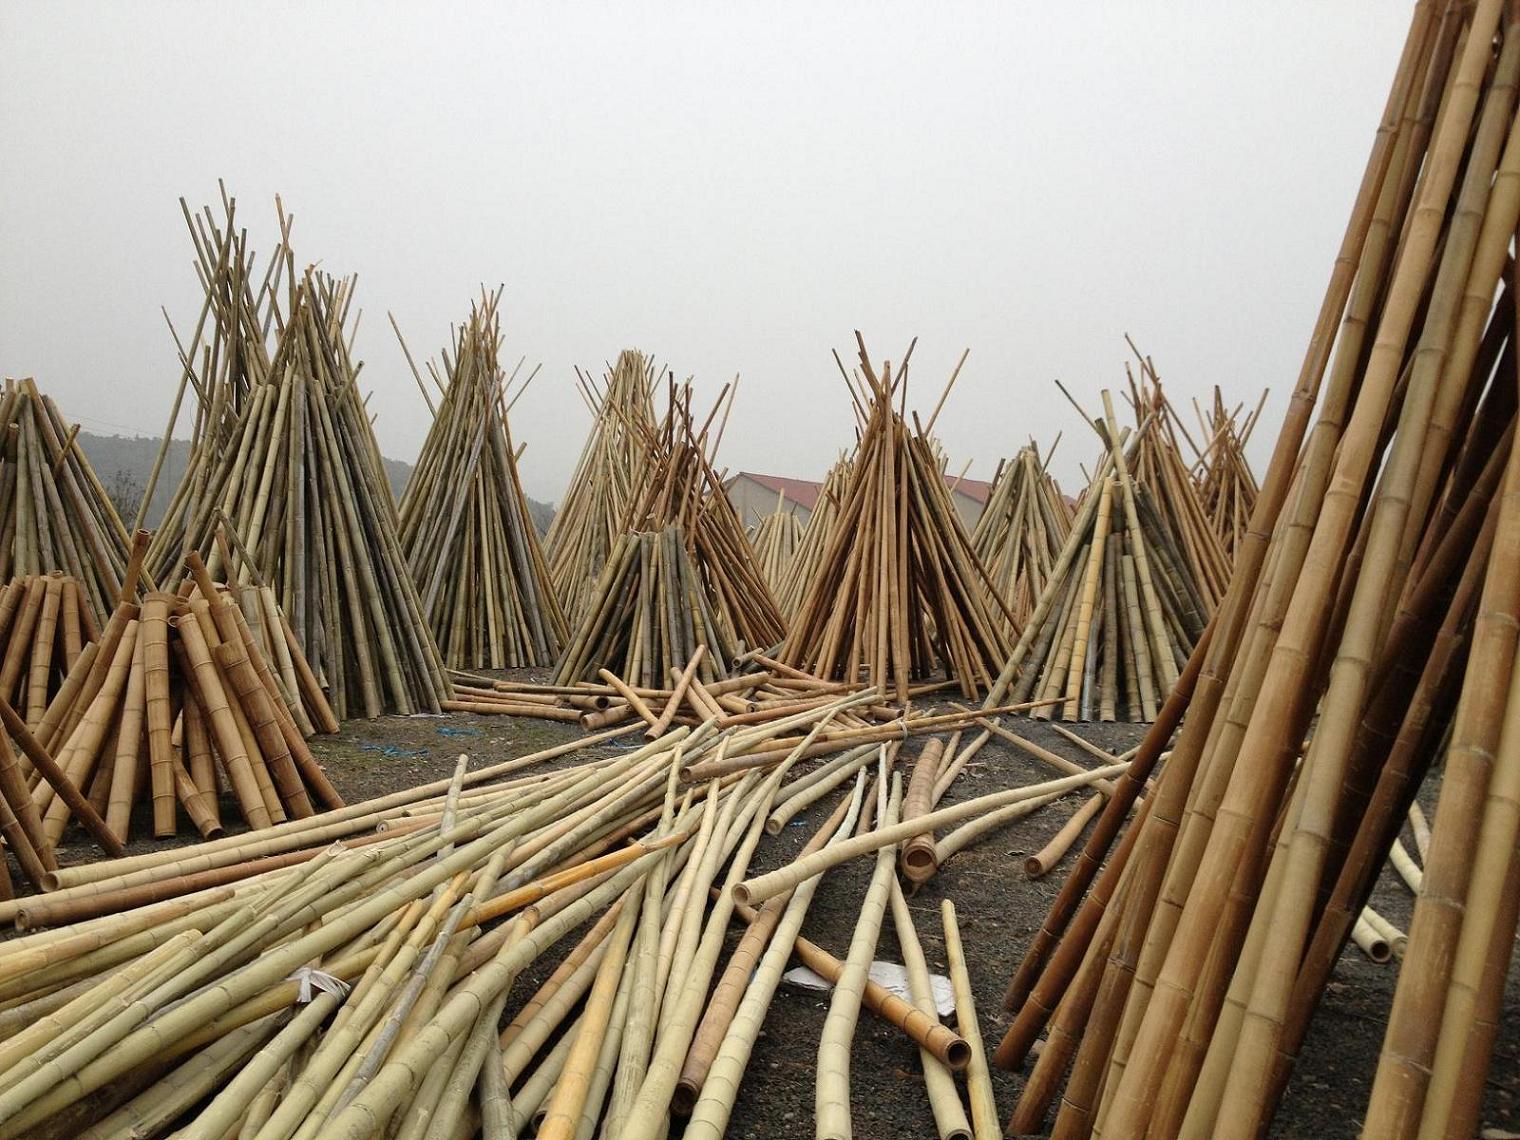 Bamboo dry